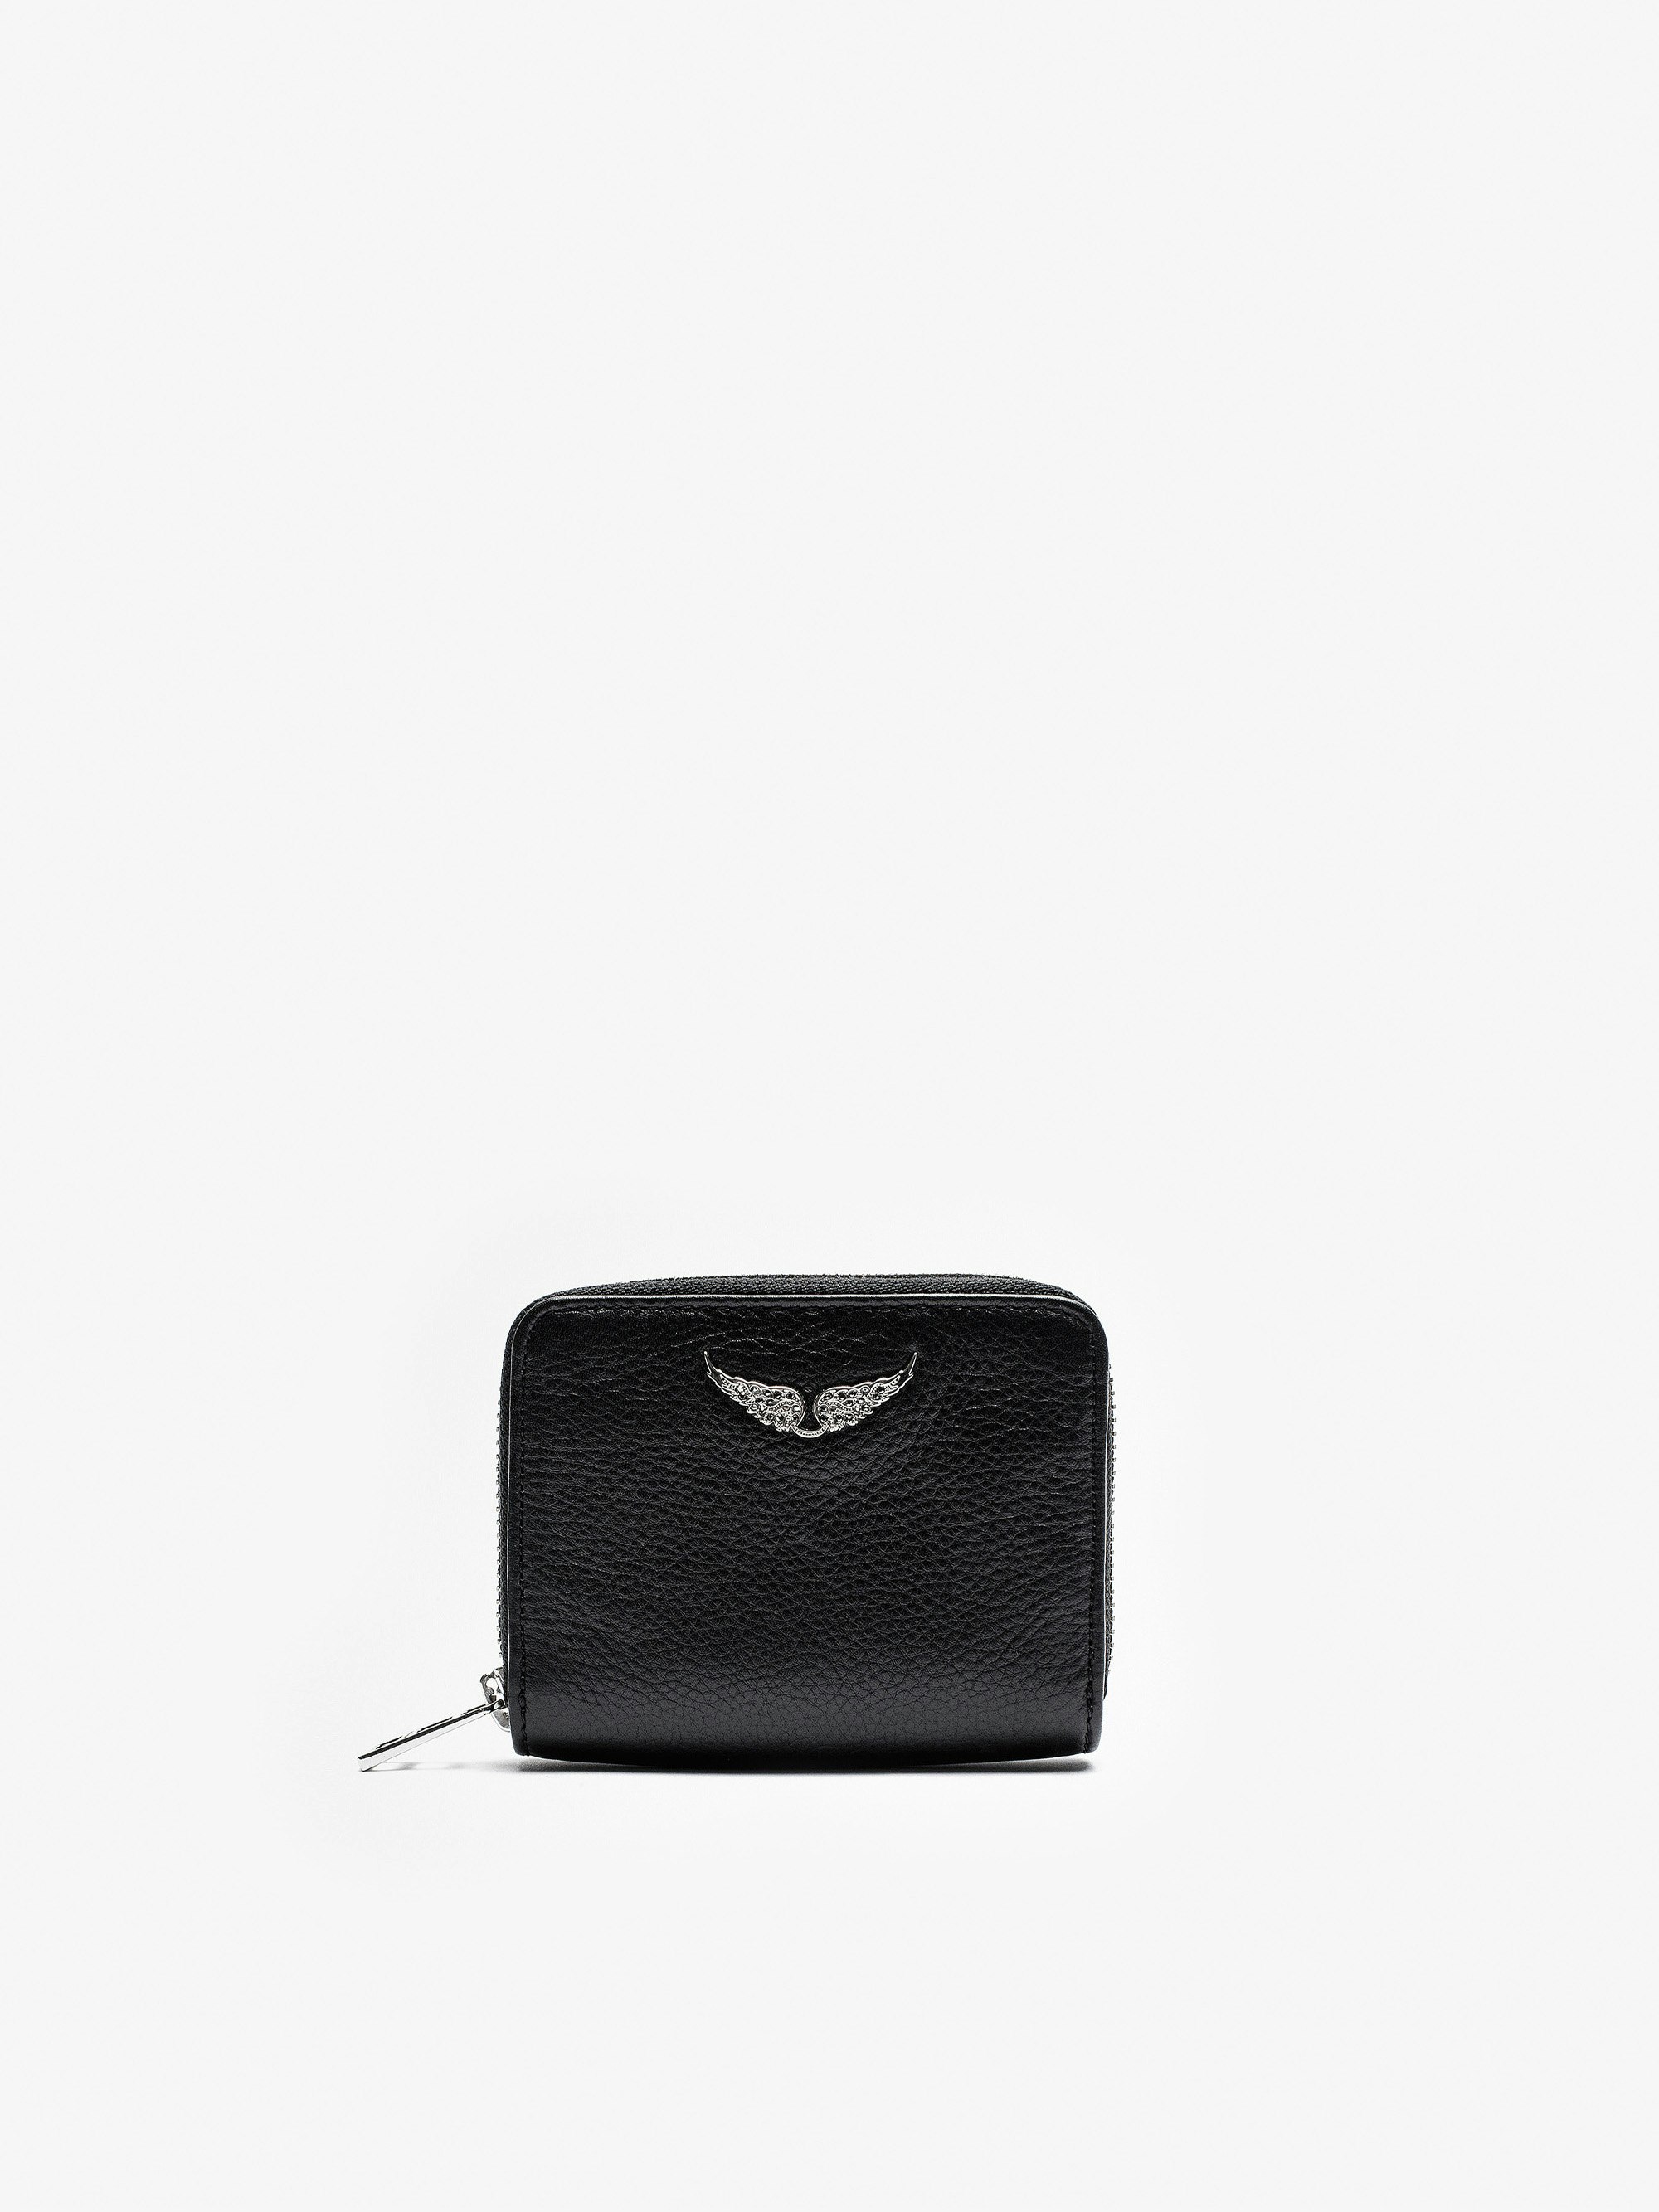 Portemonnaie Mini ZV - Damen-Portemonnaie Mini ZV aus schwarzem Leder.